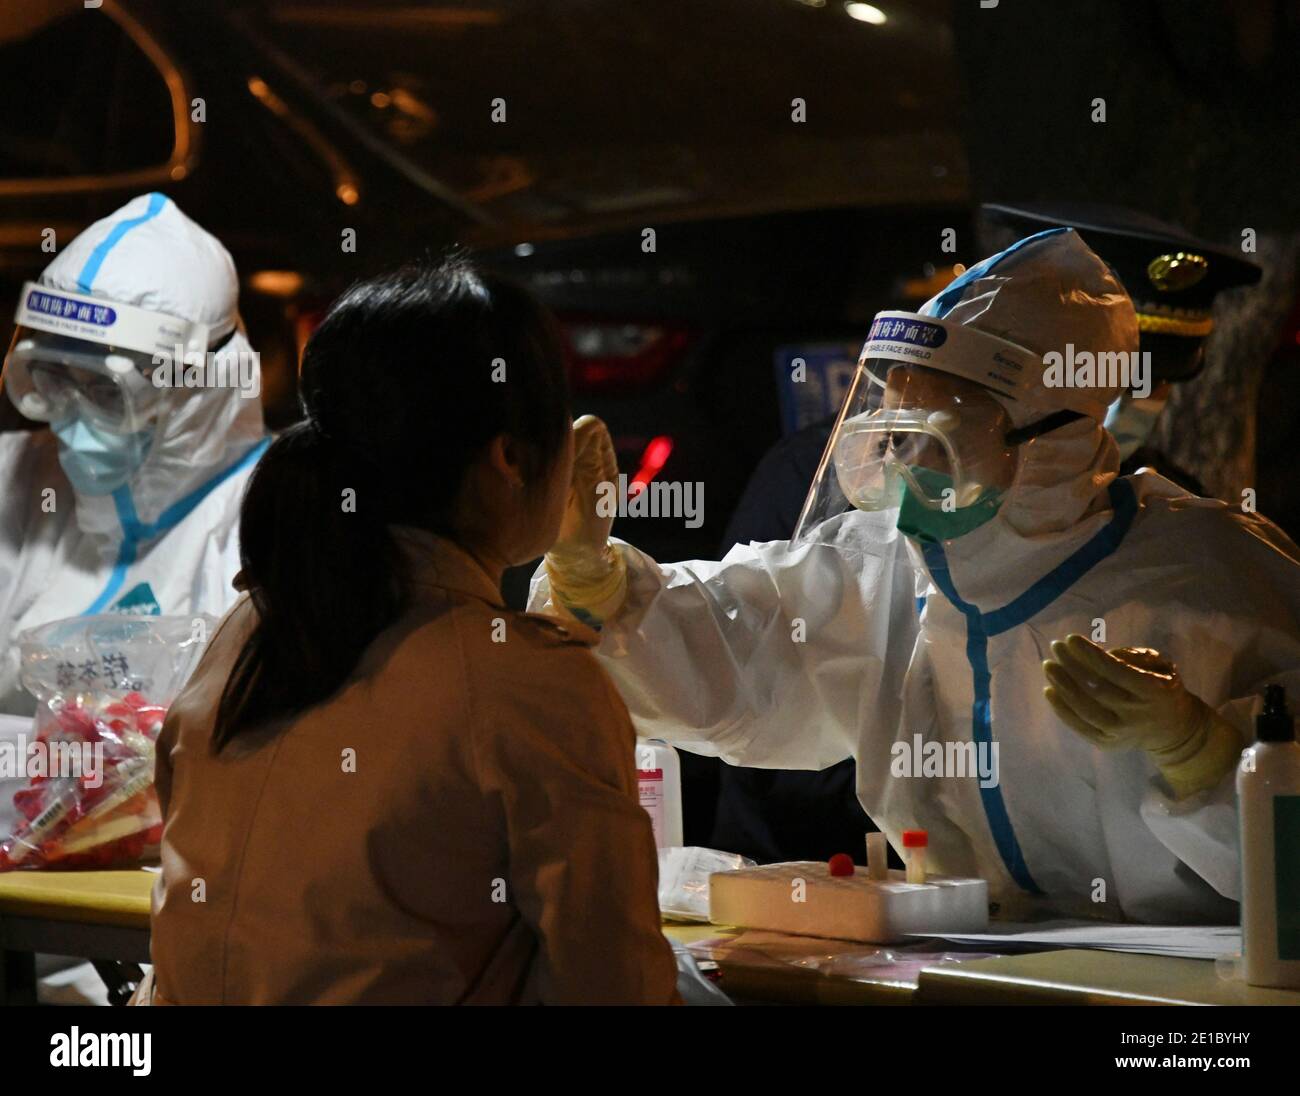 Pechino, provincia cinese di Shandong. 12 Ott 2020. Un cittadino riceve test di acido nucleico gratuiti per lo screening COVID-19 a Qingdao, Provincia di Shandong della Cina orientale, 12 ottobre 2020. Credit: Li Ziheng/Xinhua/Alamy Live News Foto Stock